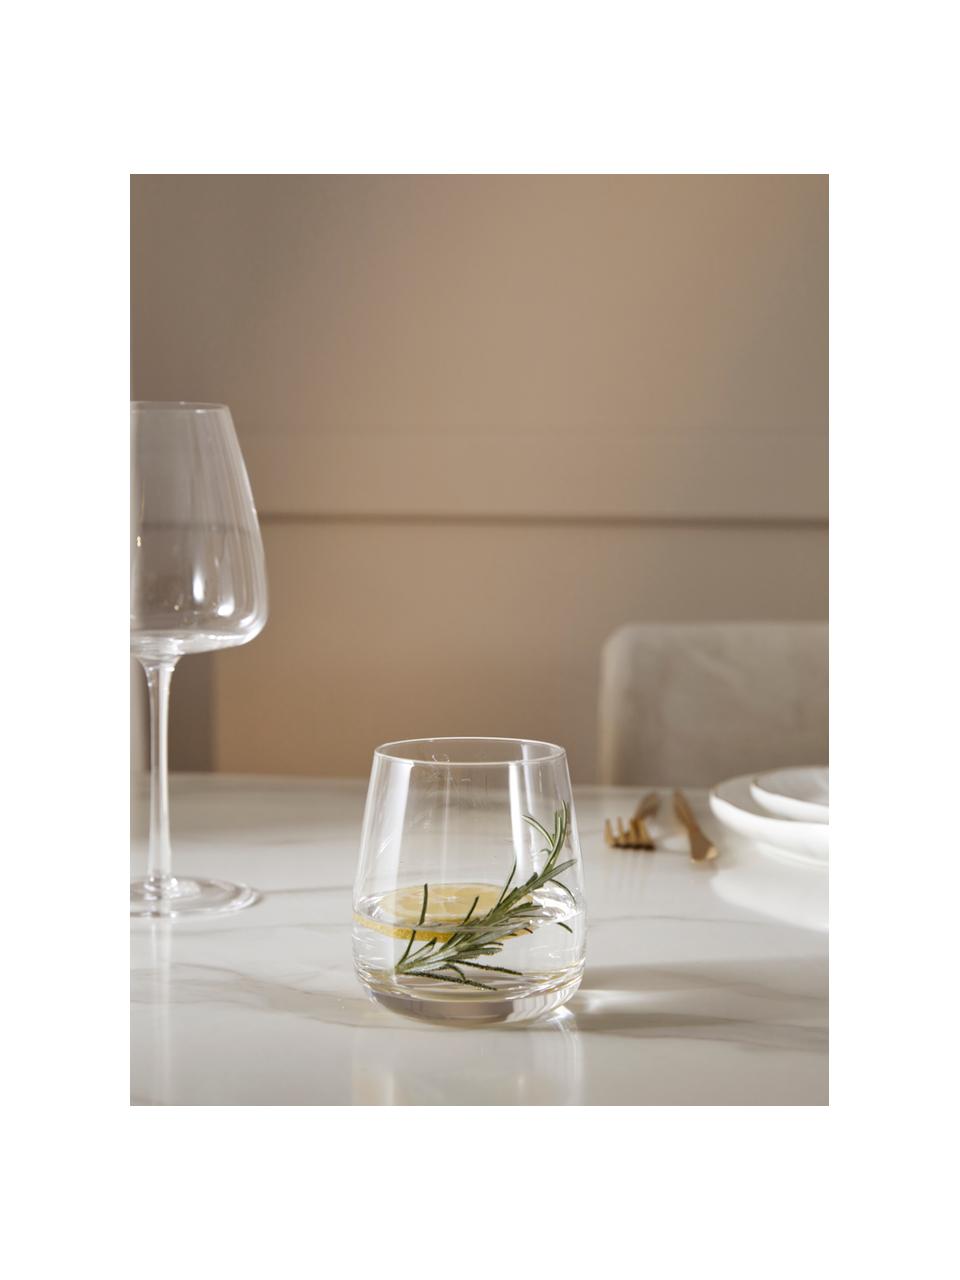 Bicchiere in vetro soffiato Ellery 4 pz, Vetro, Trasparente, Ø 9 x Alt. 10 cm, 370 ml